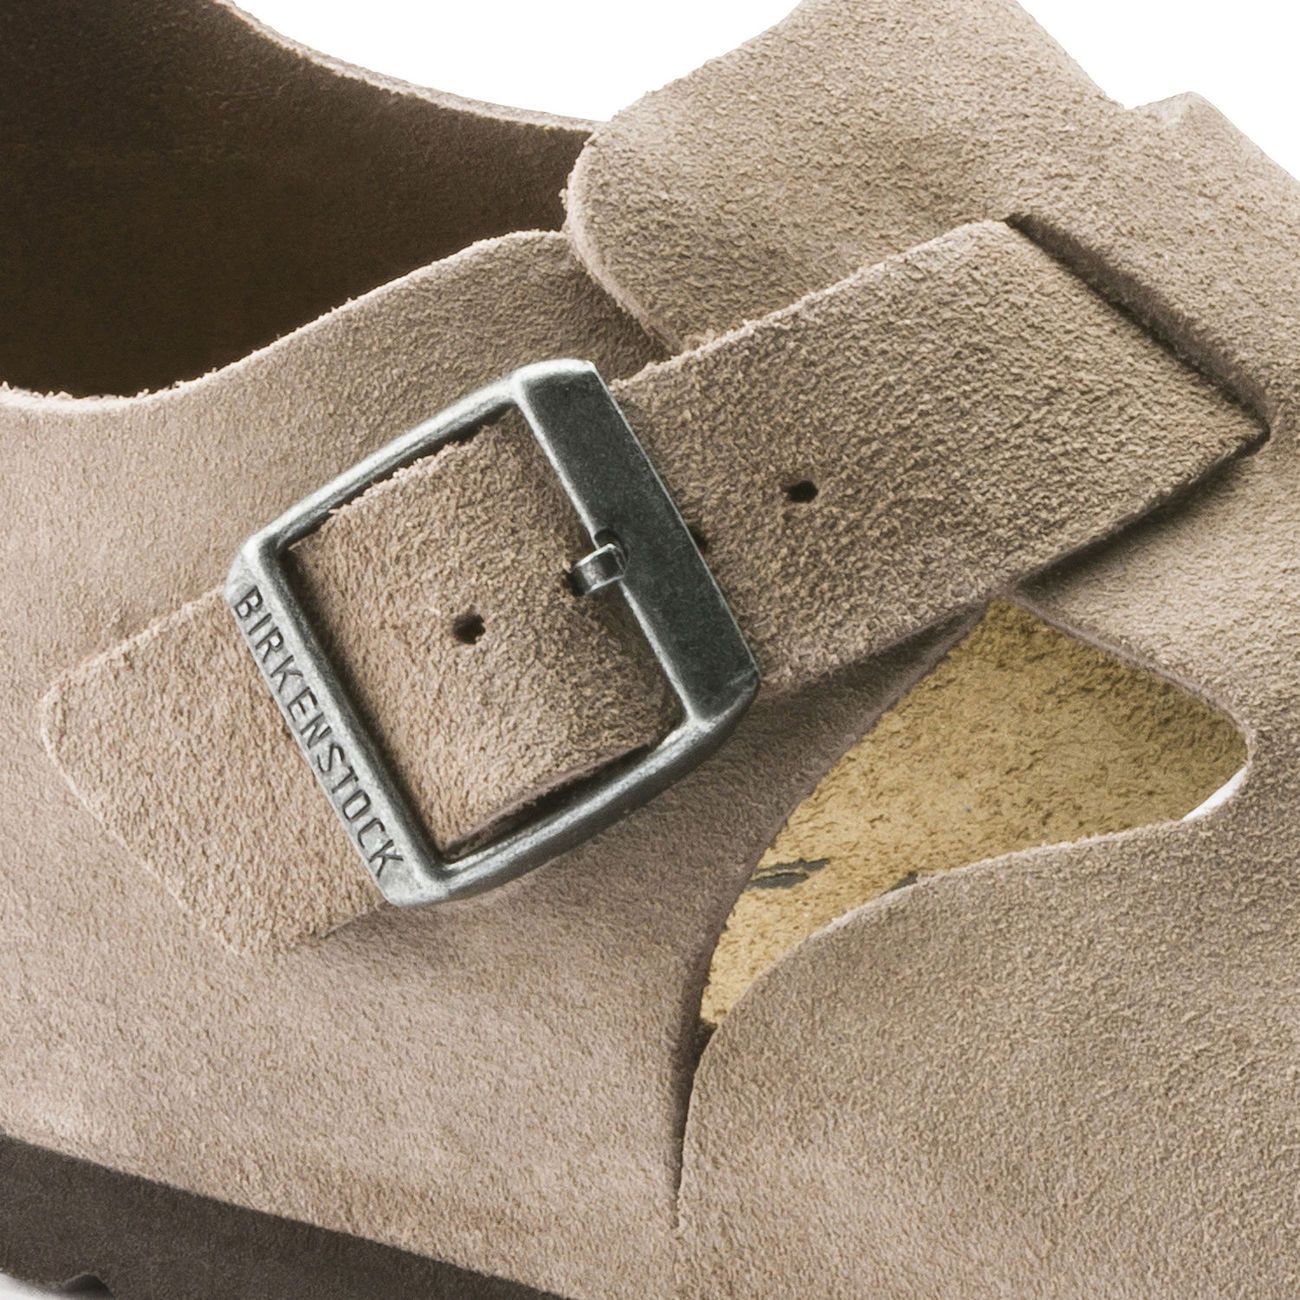 Simmi London platform heeled sandals in camel | ASOS